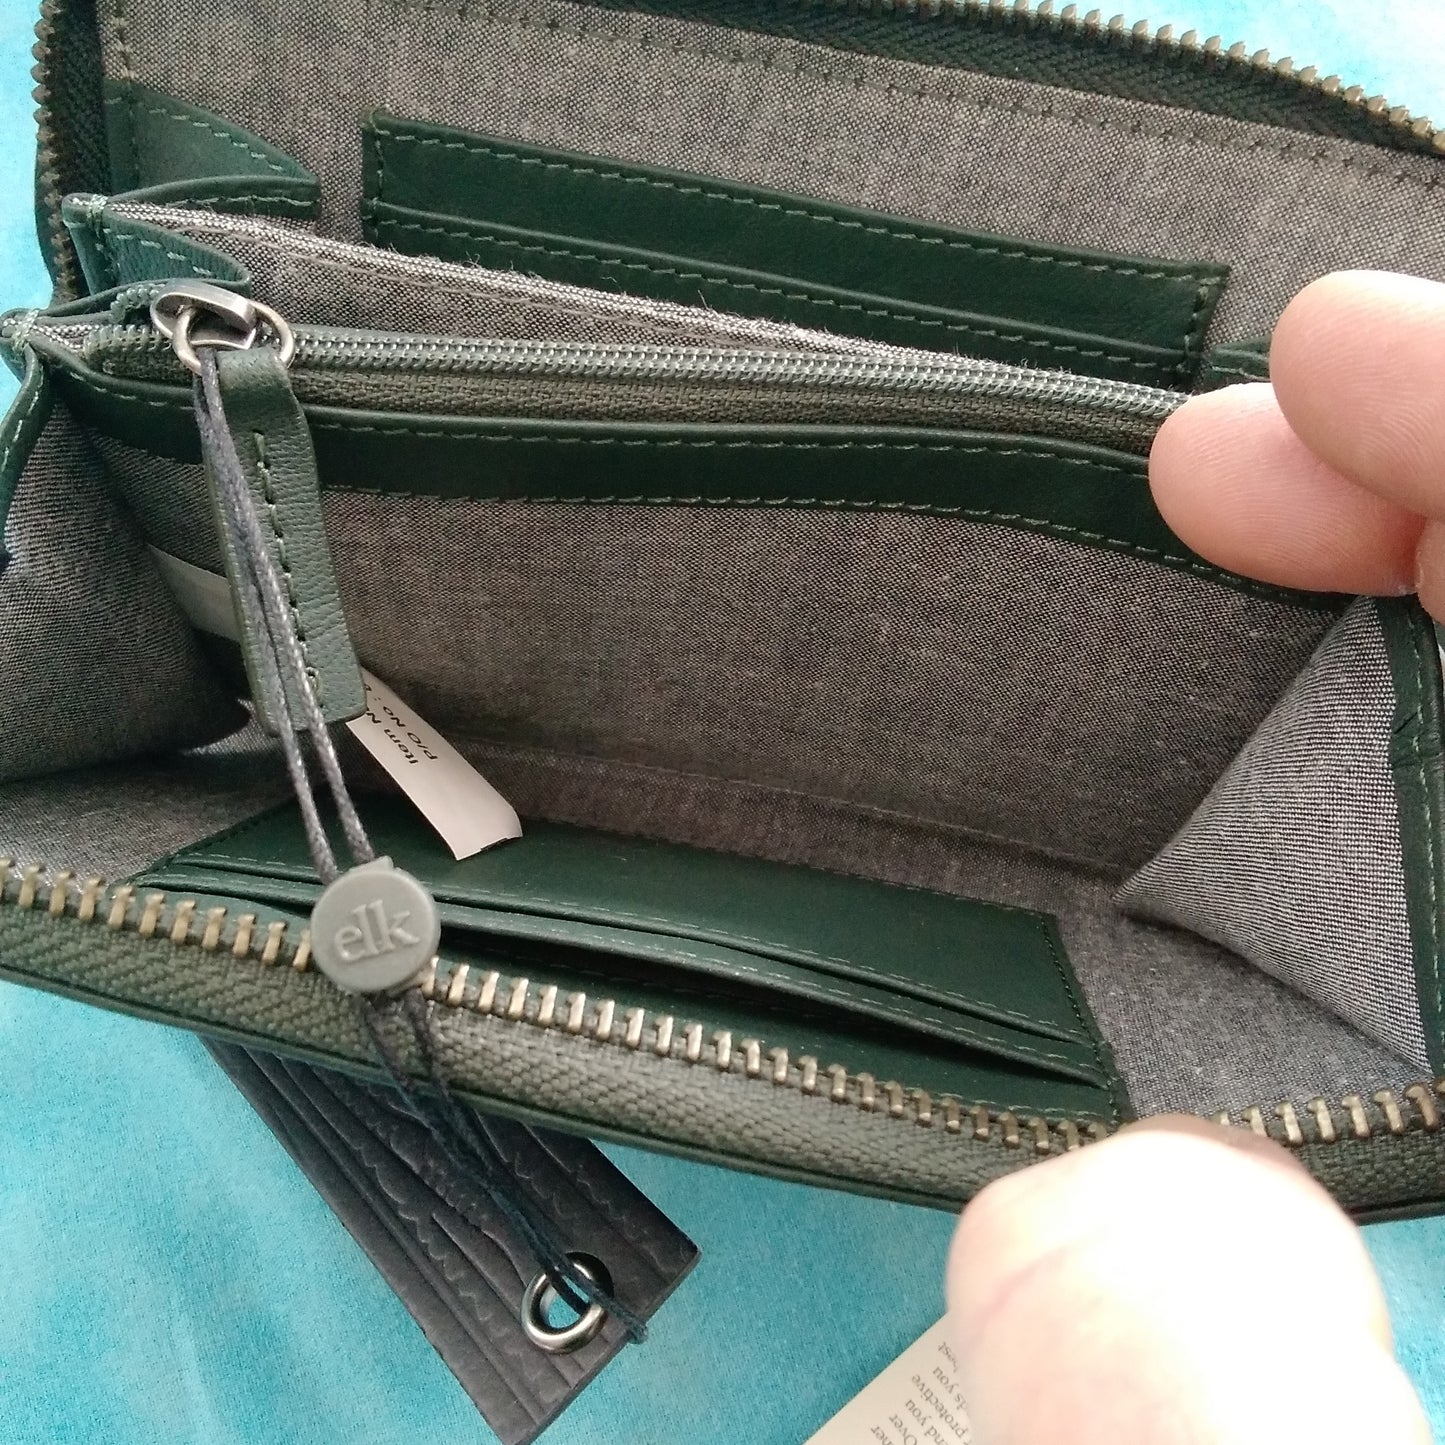 NWT - Elk Green Leather Clutch Wallet